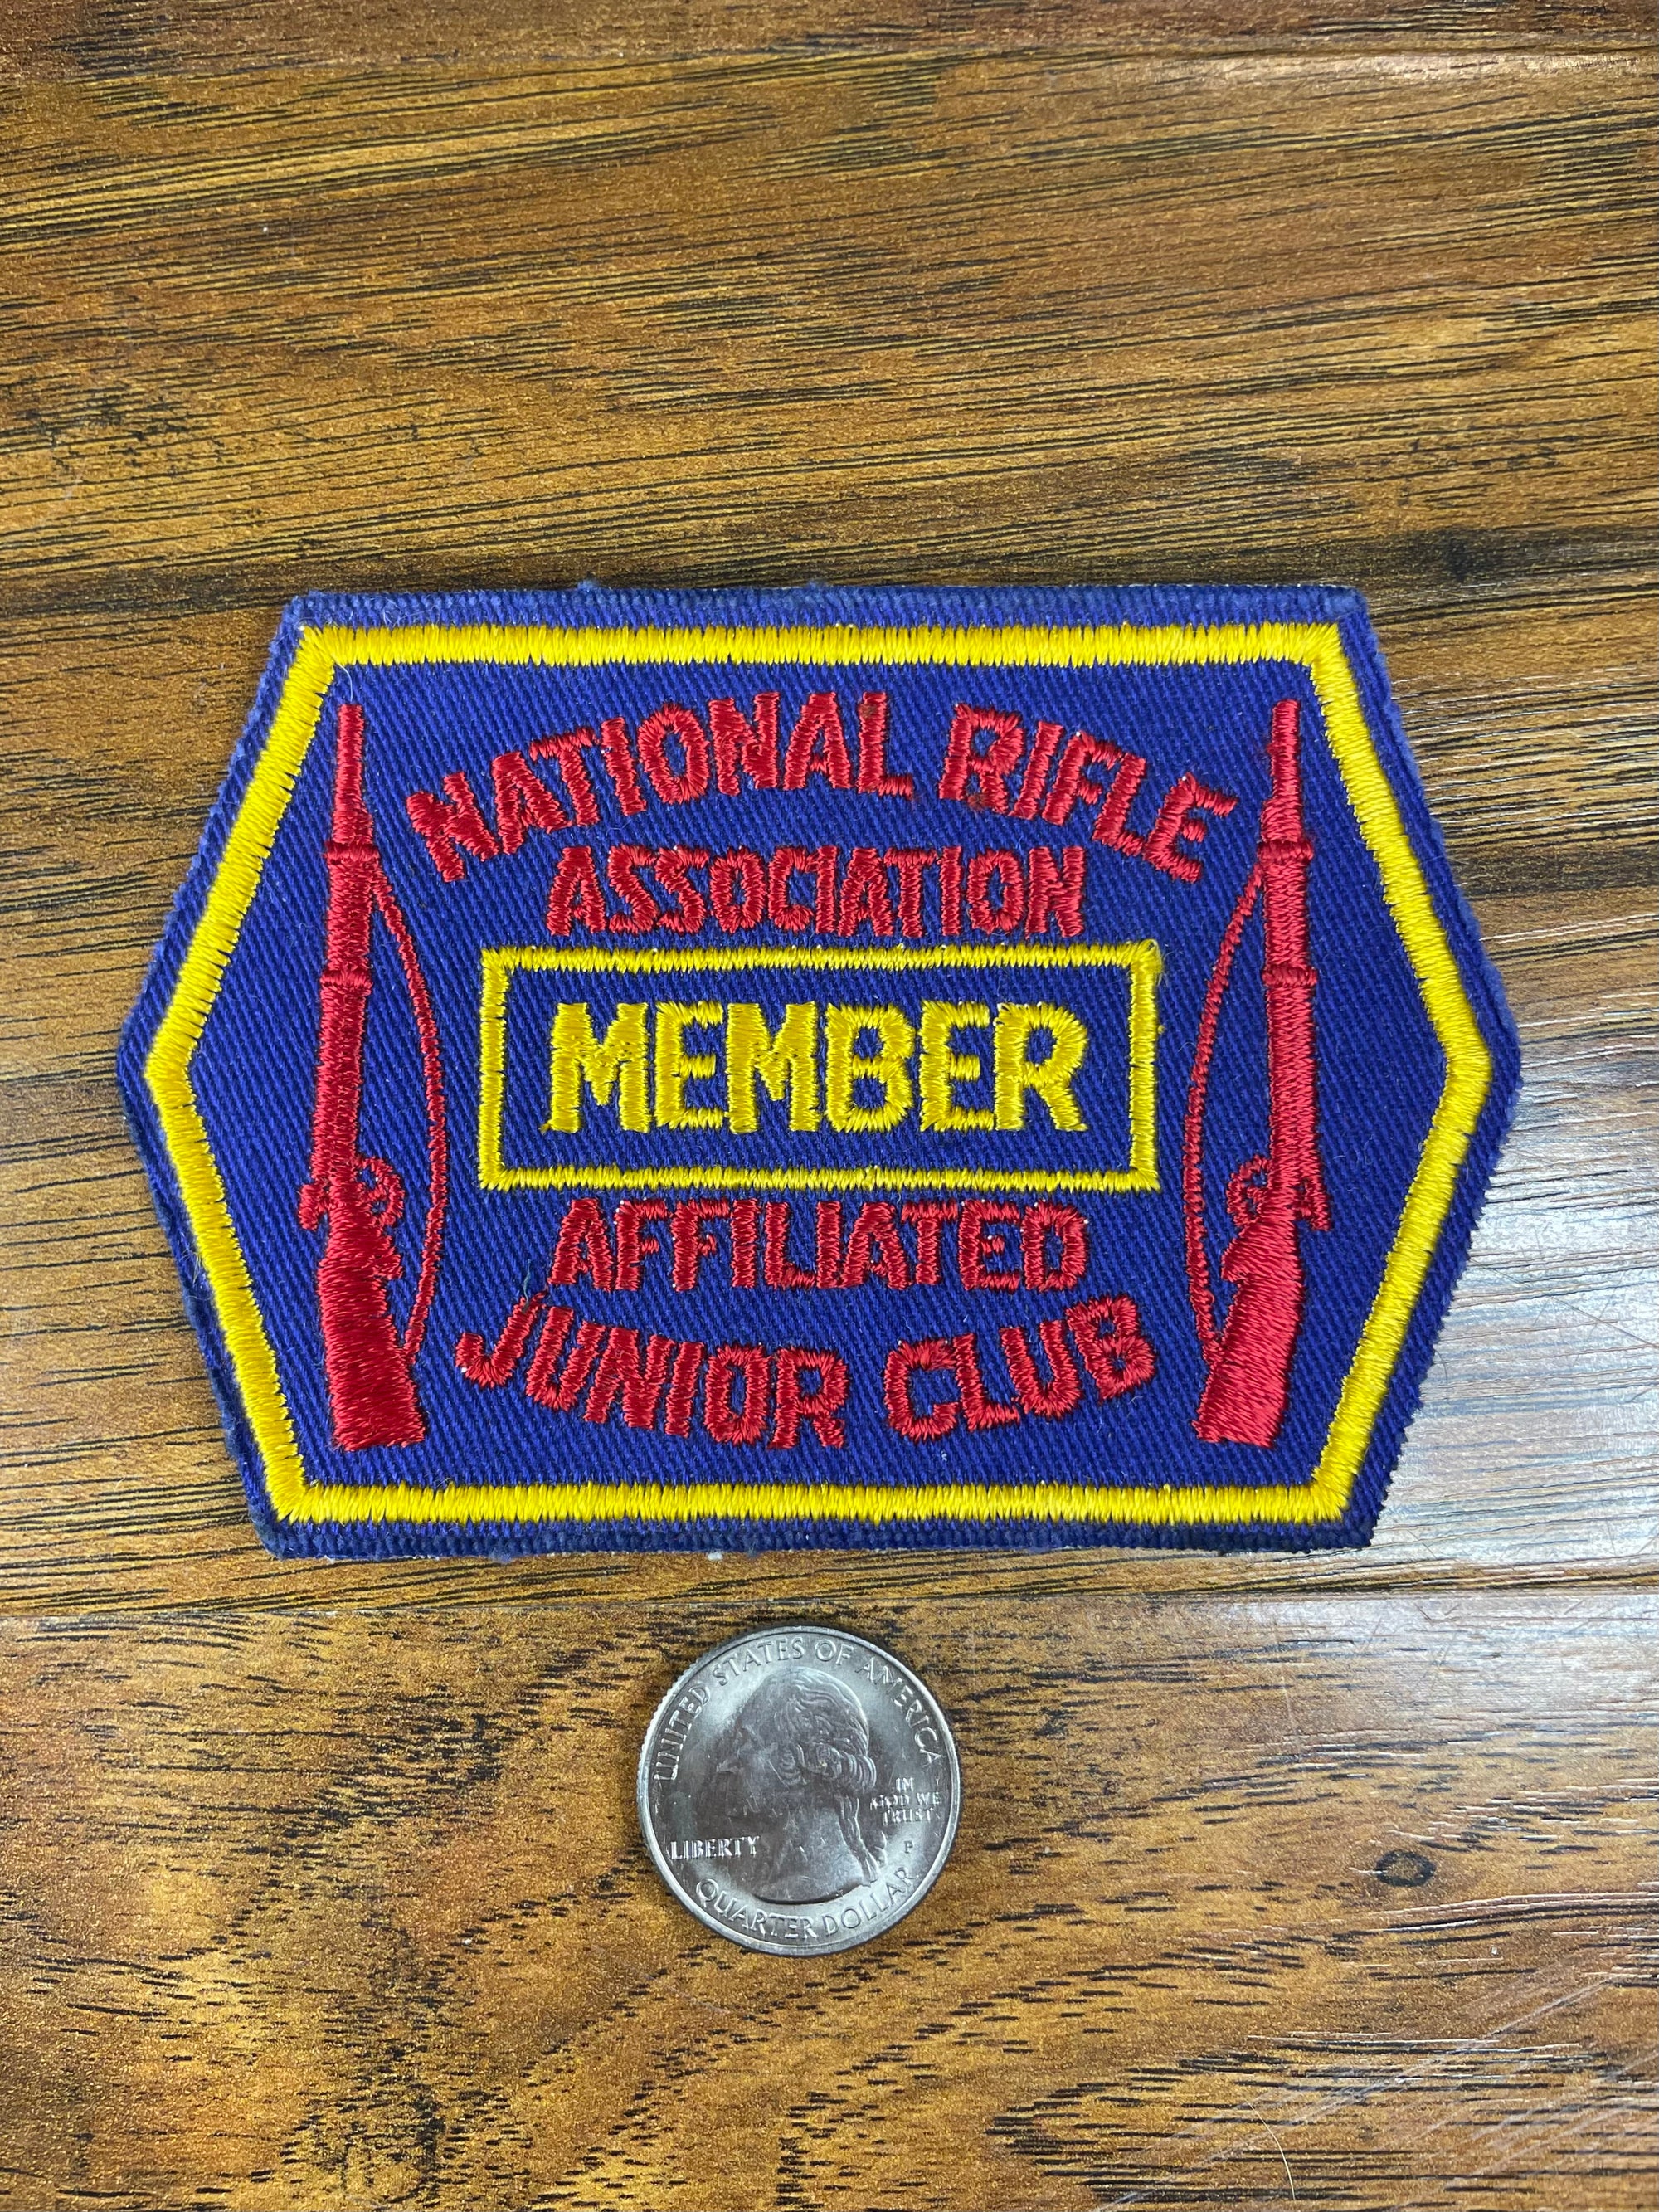 Vintage National Rifle Association Member- Affiliated Junior Club